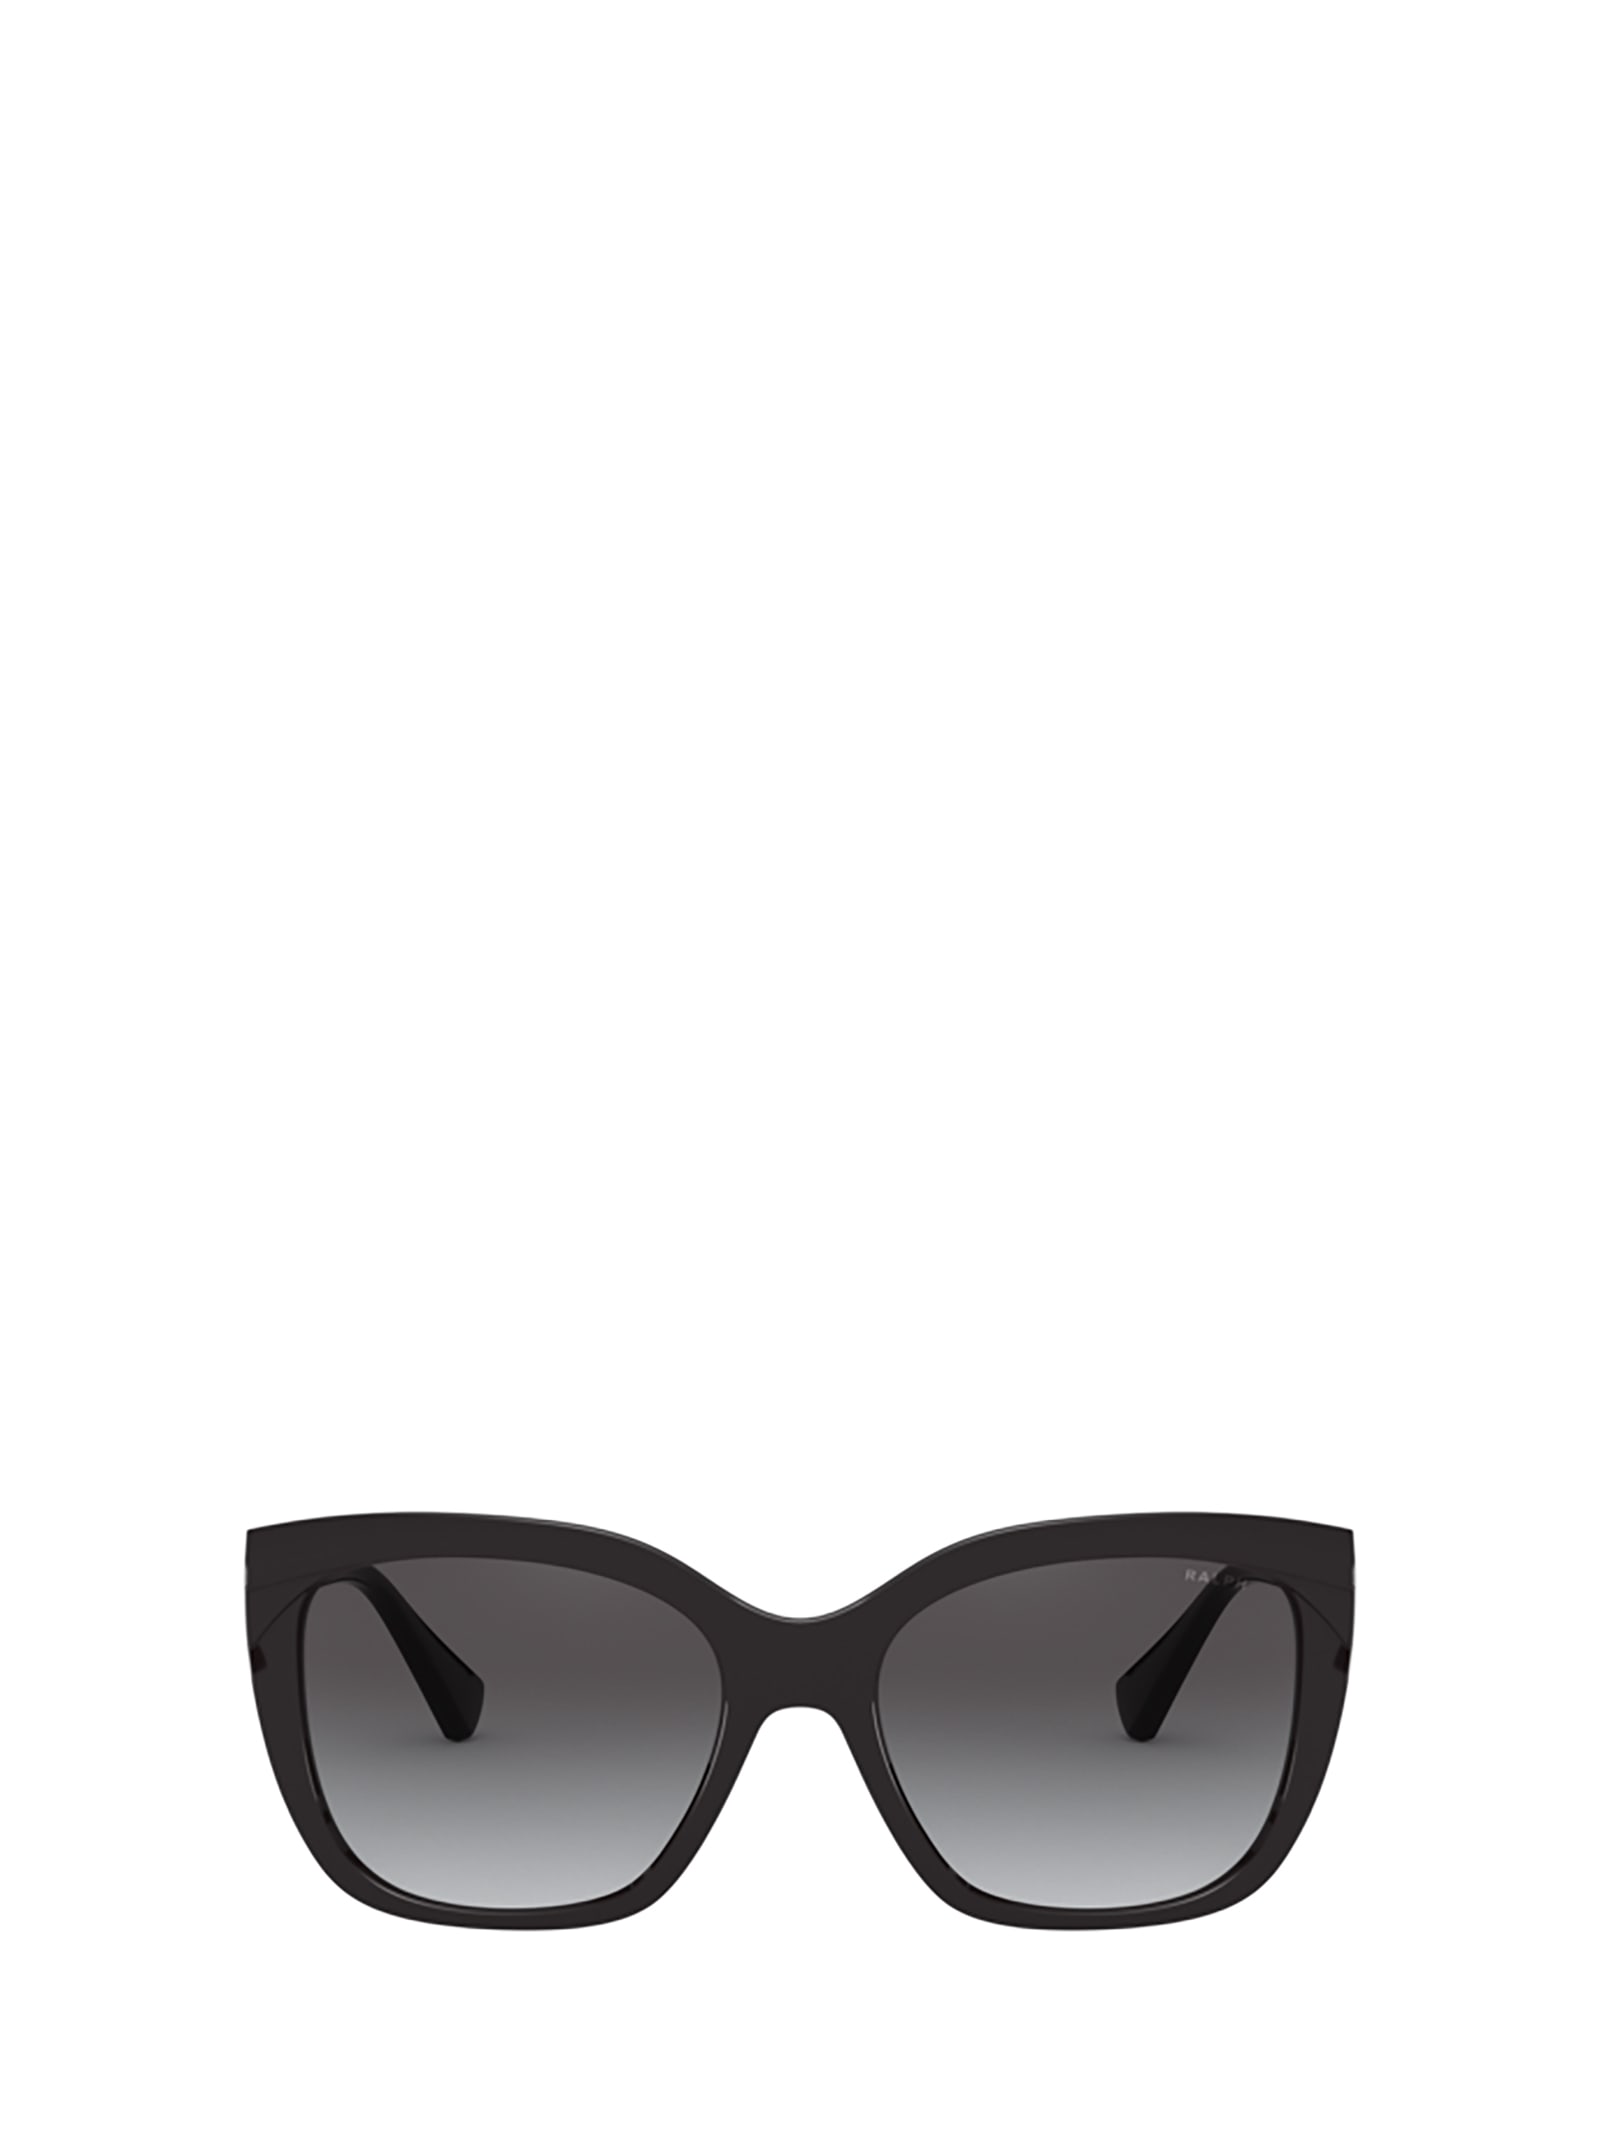 Polo Ralph Lauren Ra5265 Shiny Black Sunglasses